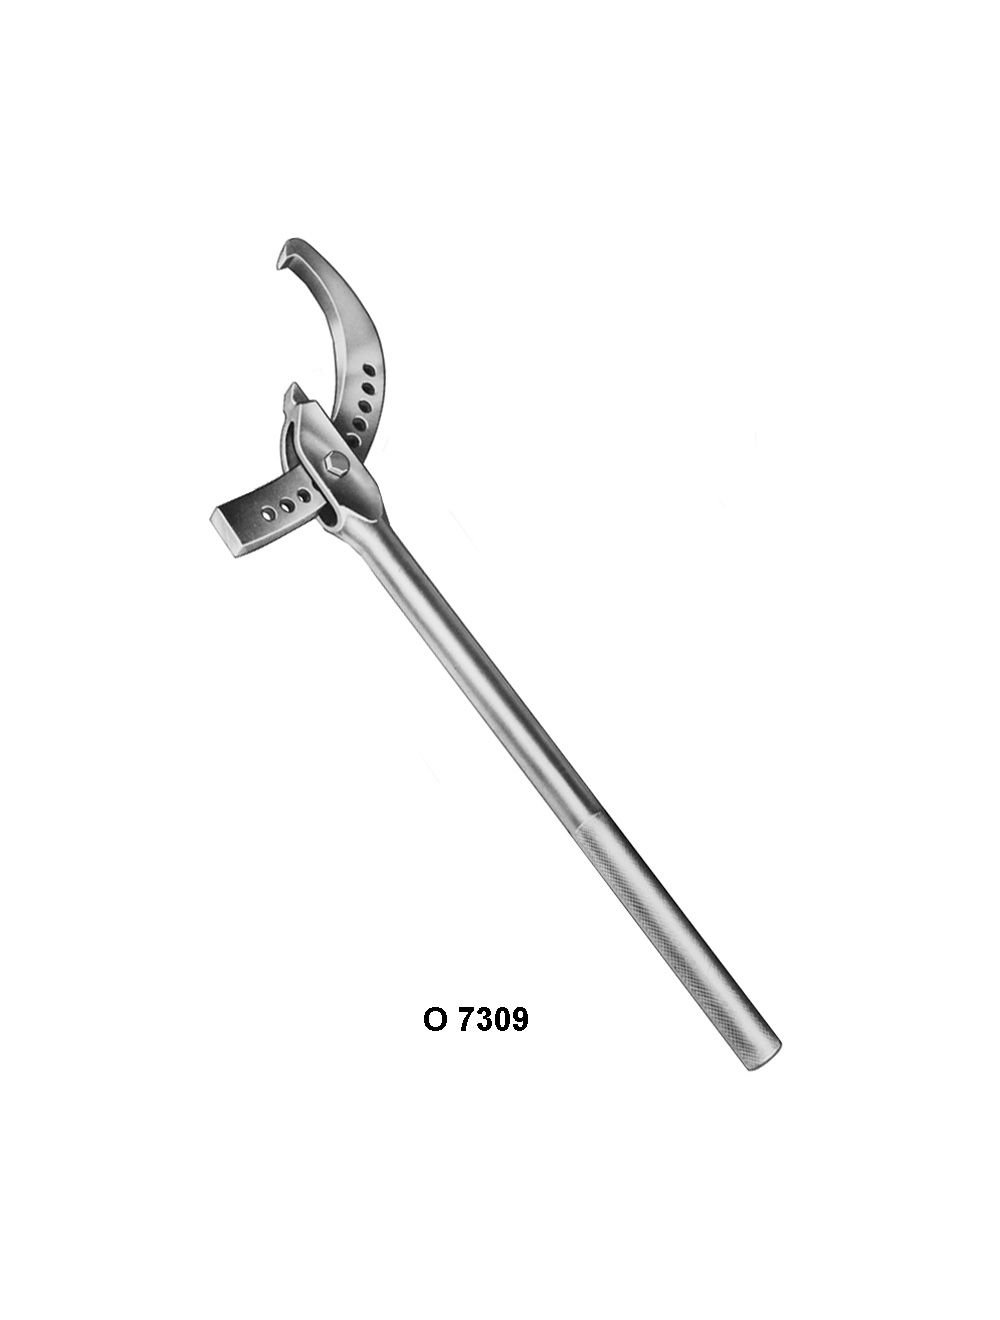 OTC (7309) Heavy-Duty Adjustable Hook Spanner Wrench